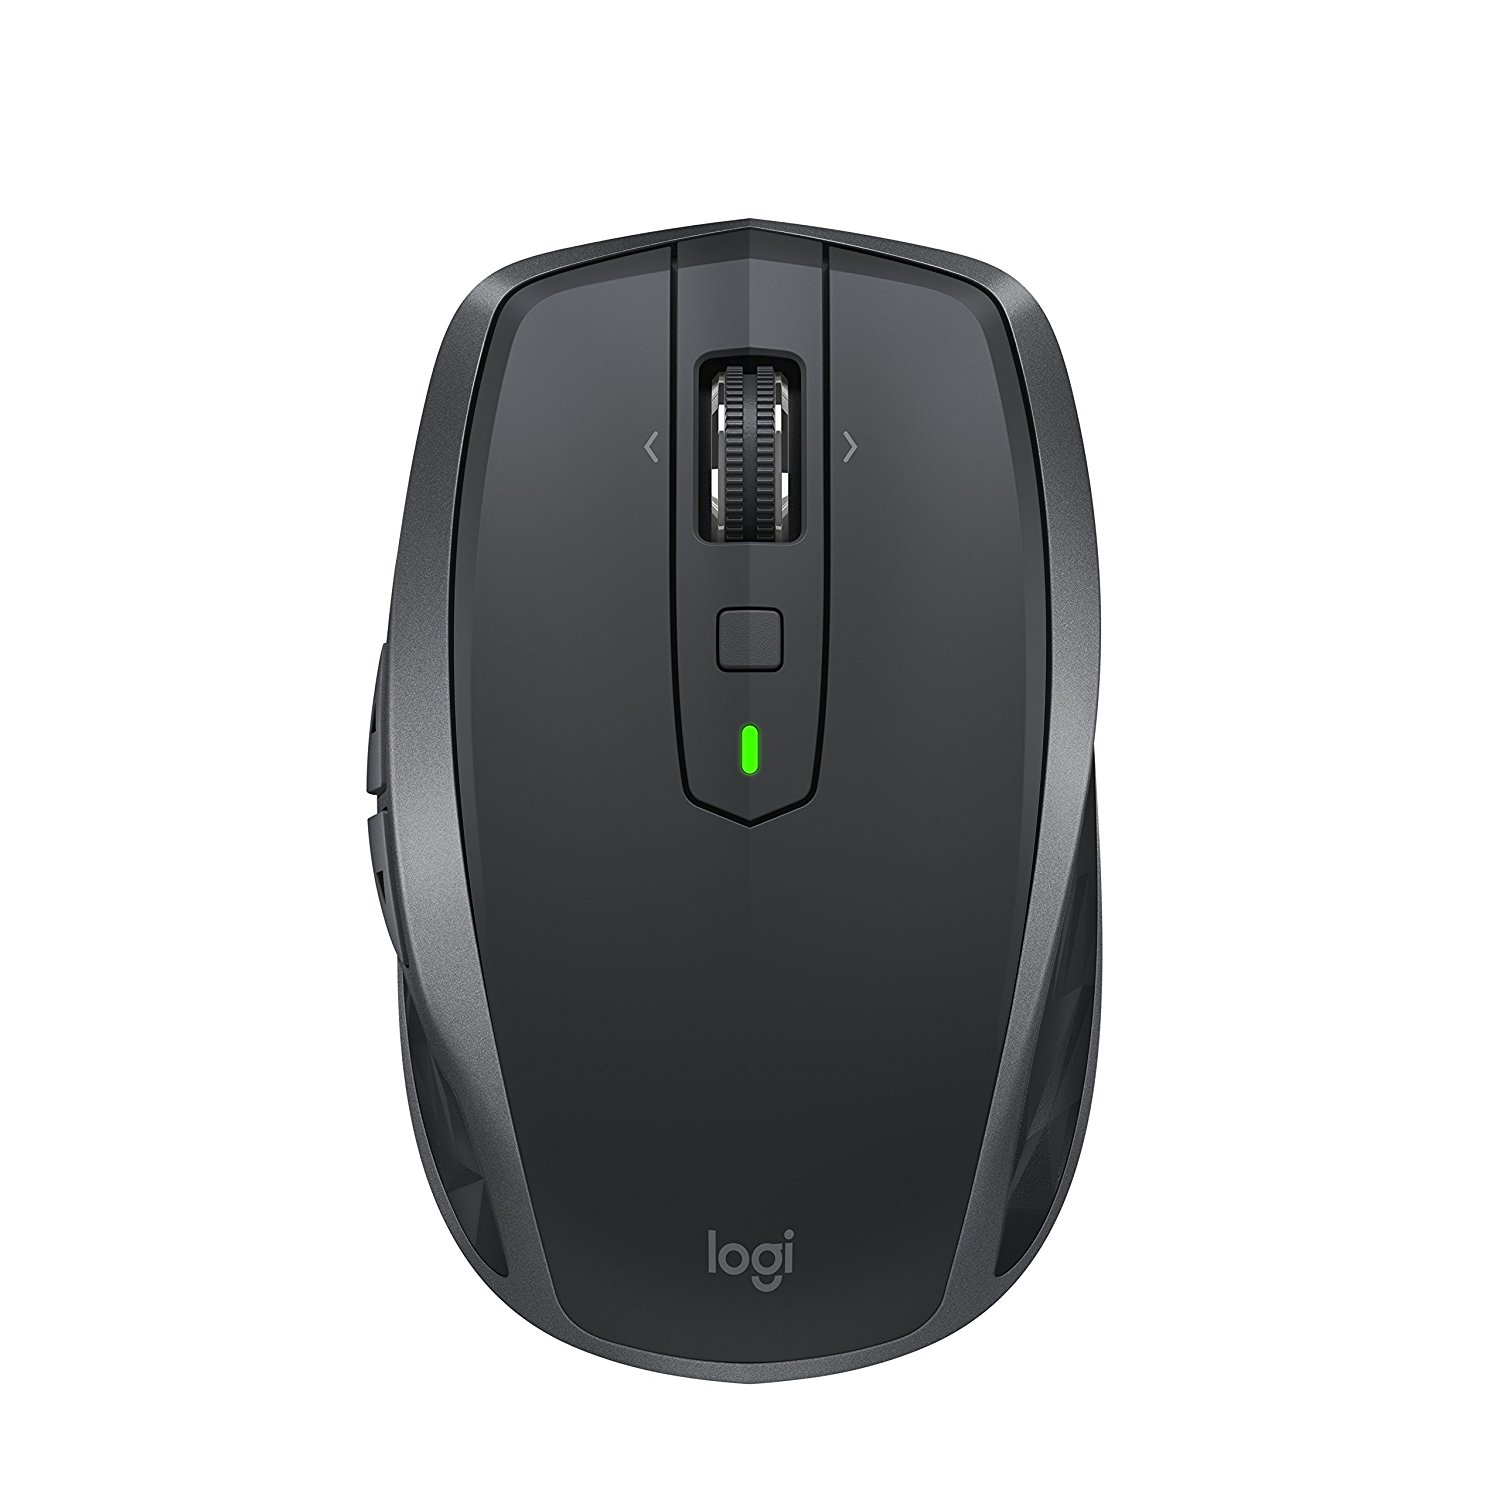 A bluetooth wireless mouse, Logitech MX Anywhere 2